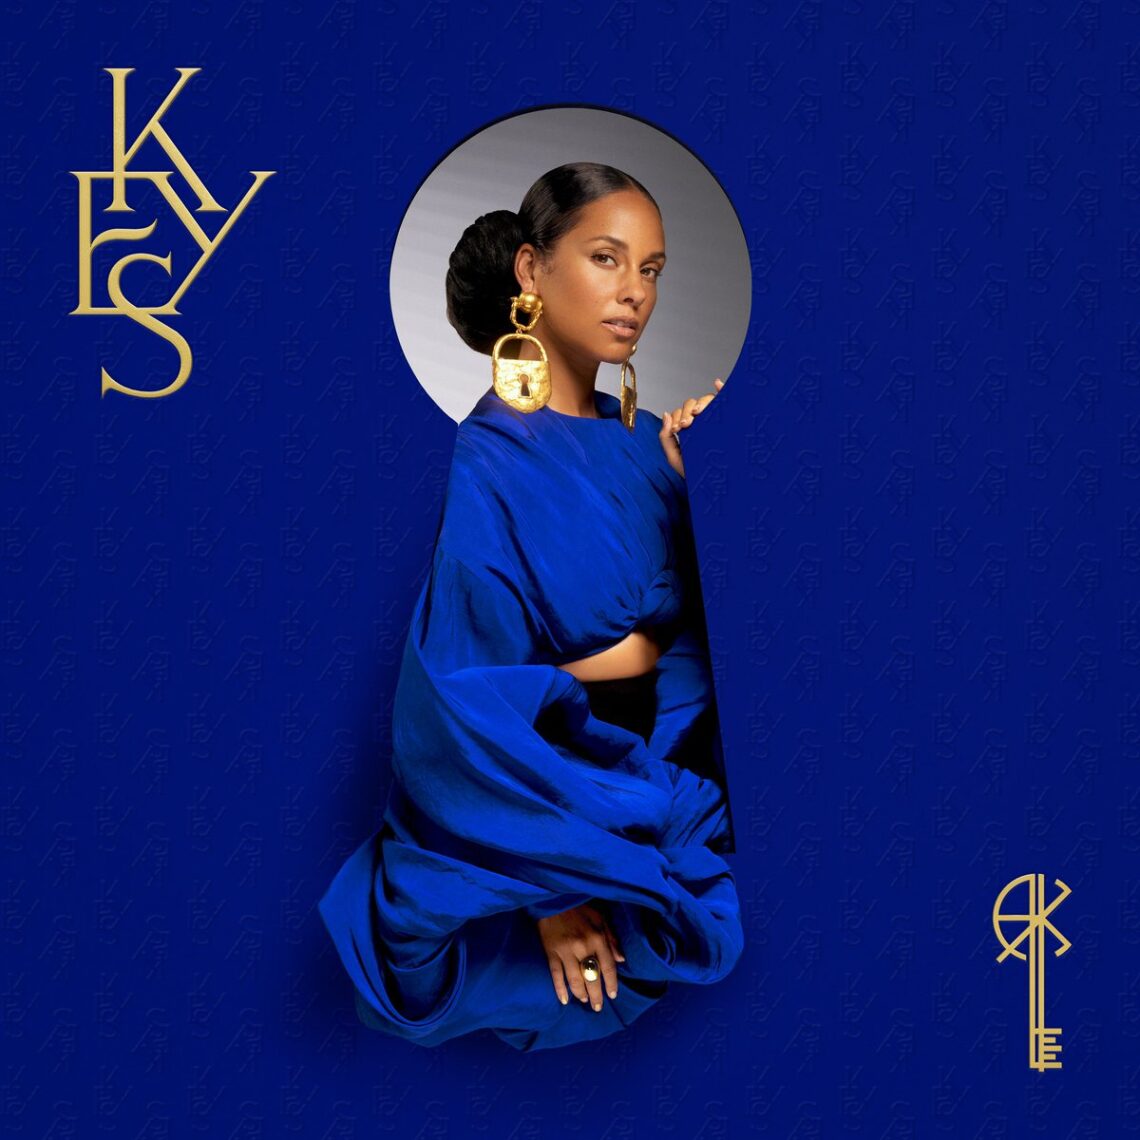 enthousiast pensioen Gymnast Alicia Keys Announces New Double Album 'Keys' - Rated R&B